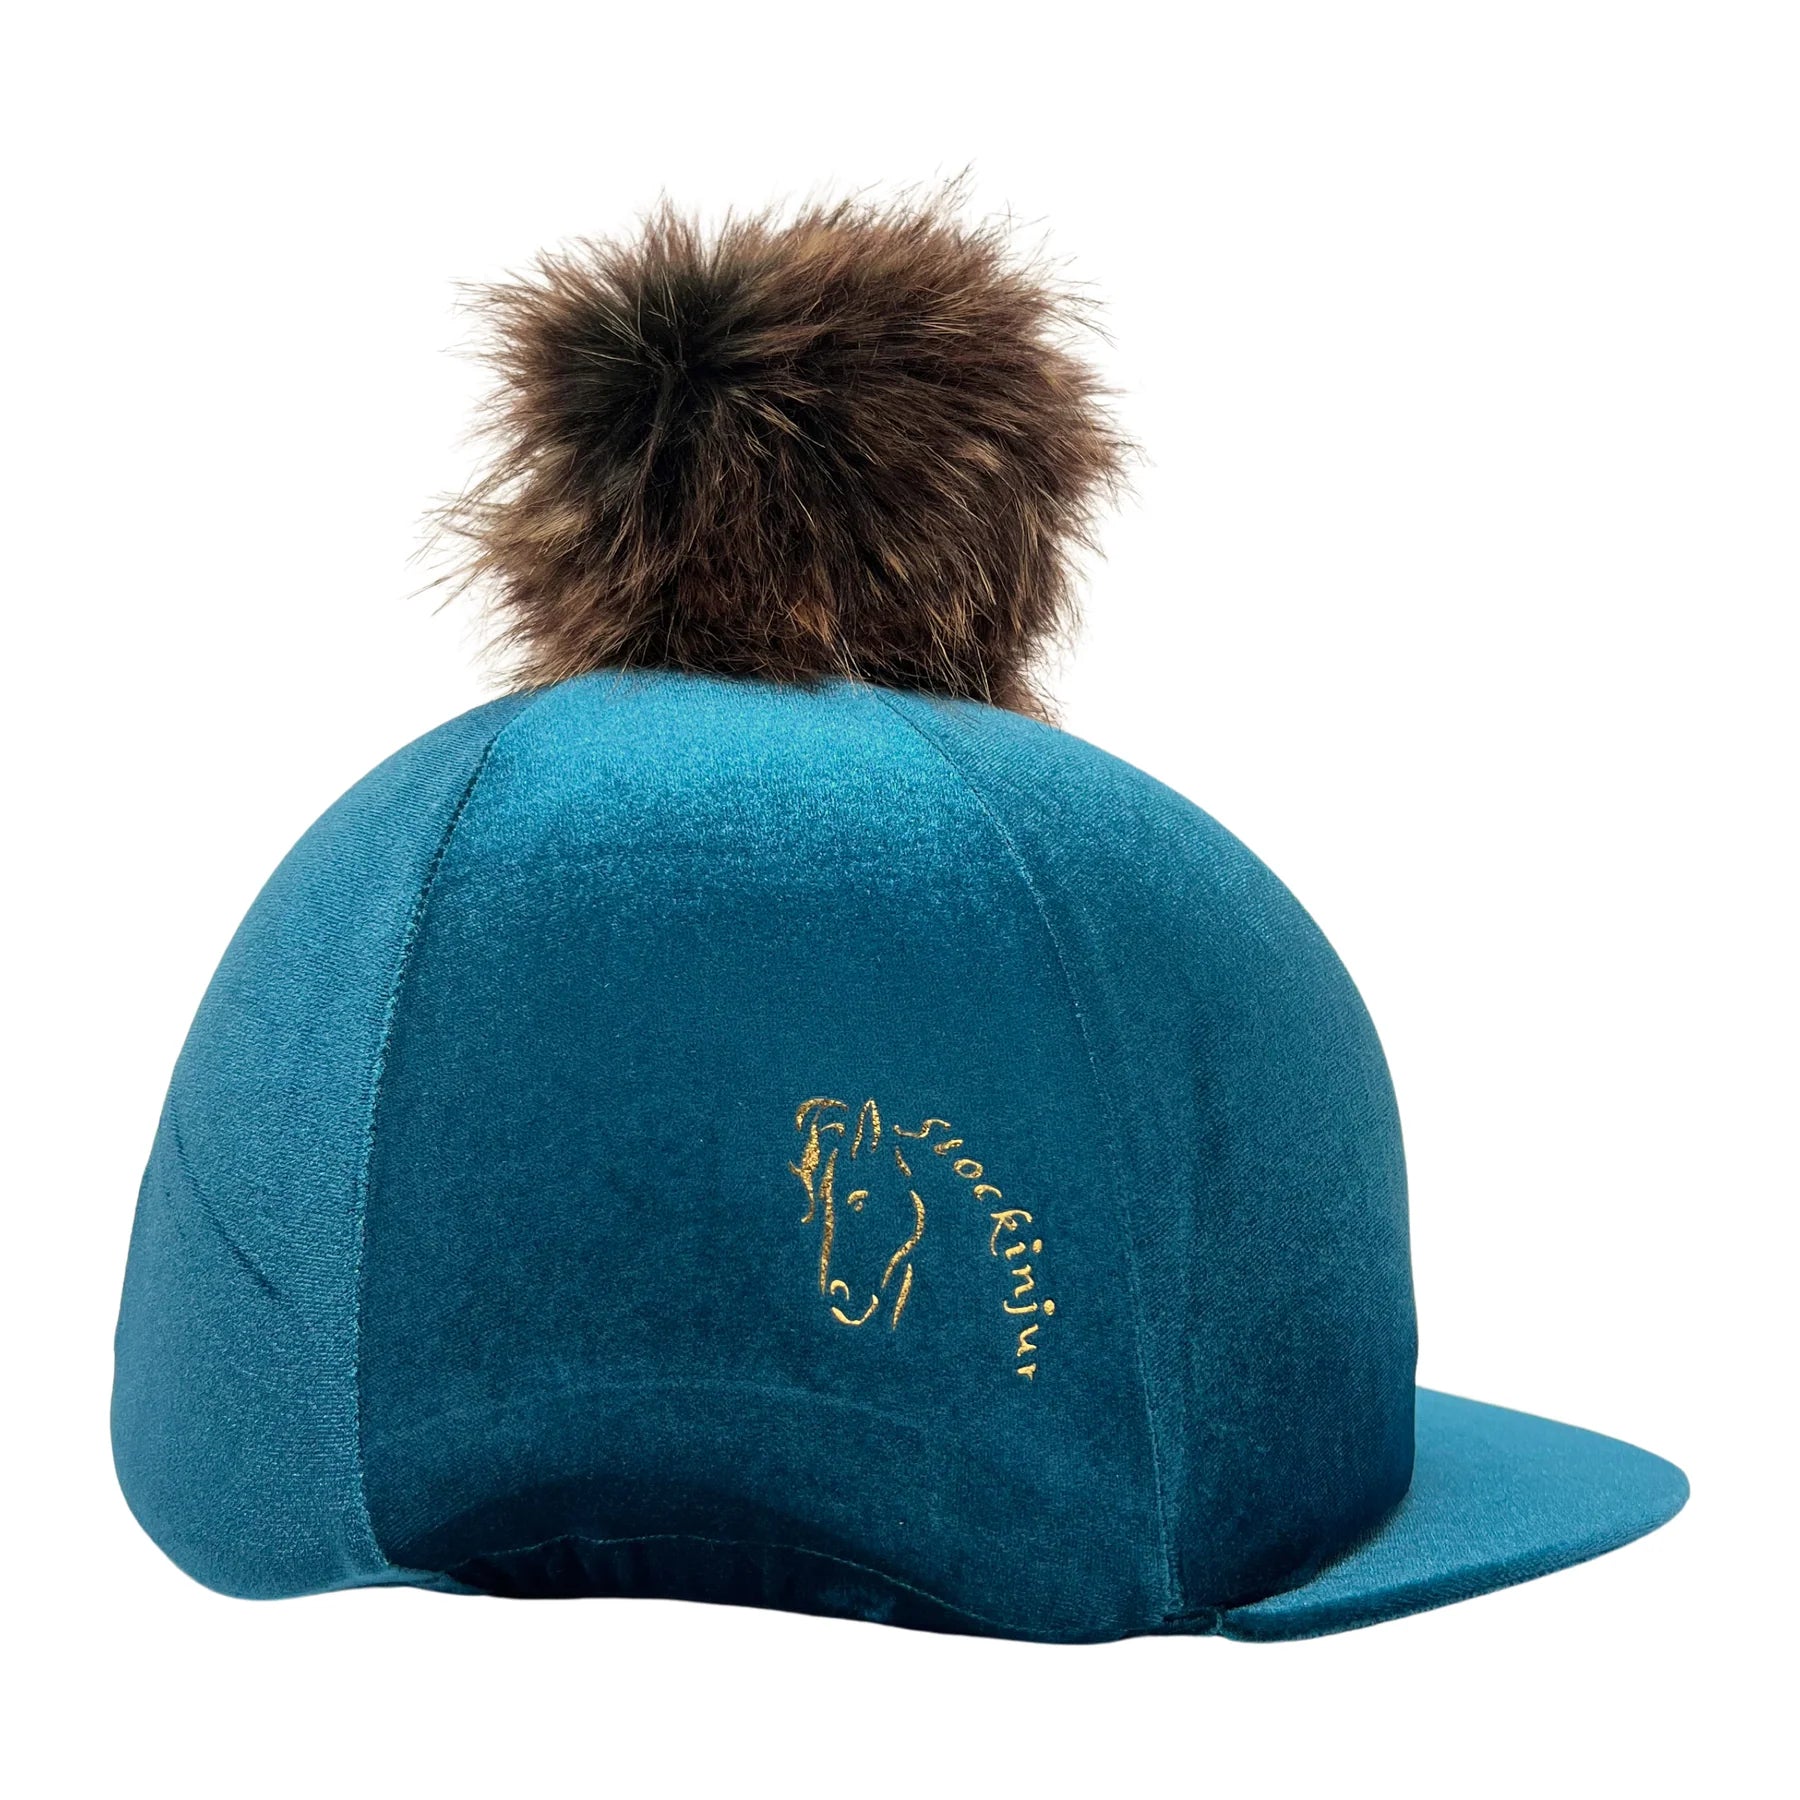 Stockinjur Truffle Collection – Hat Silk